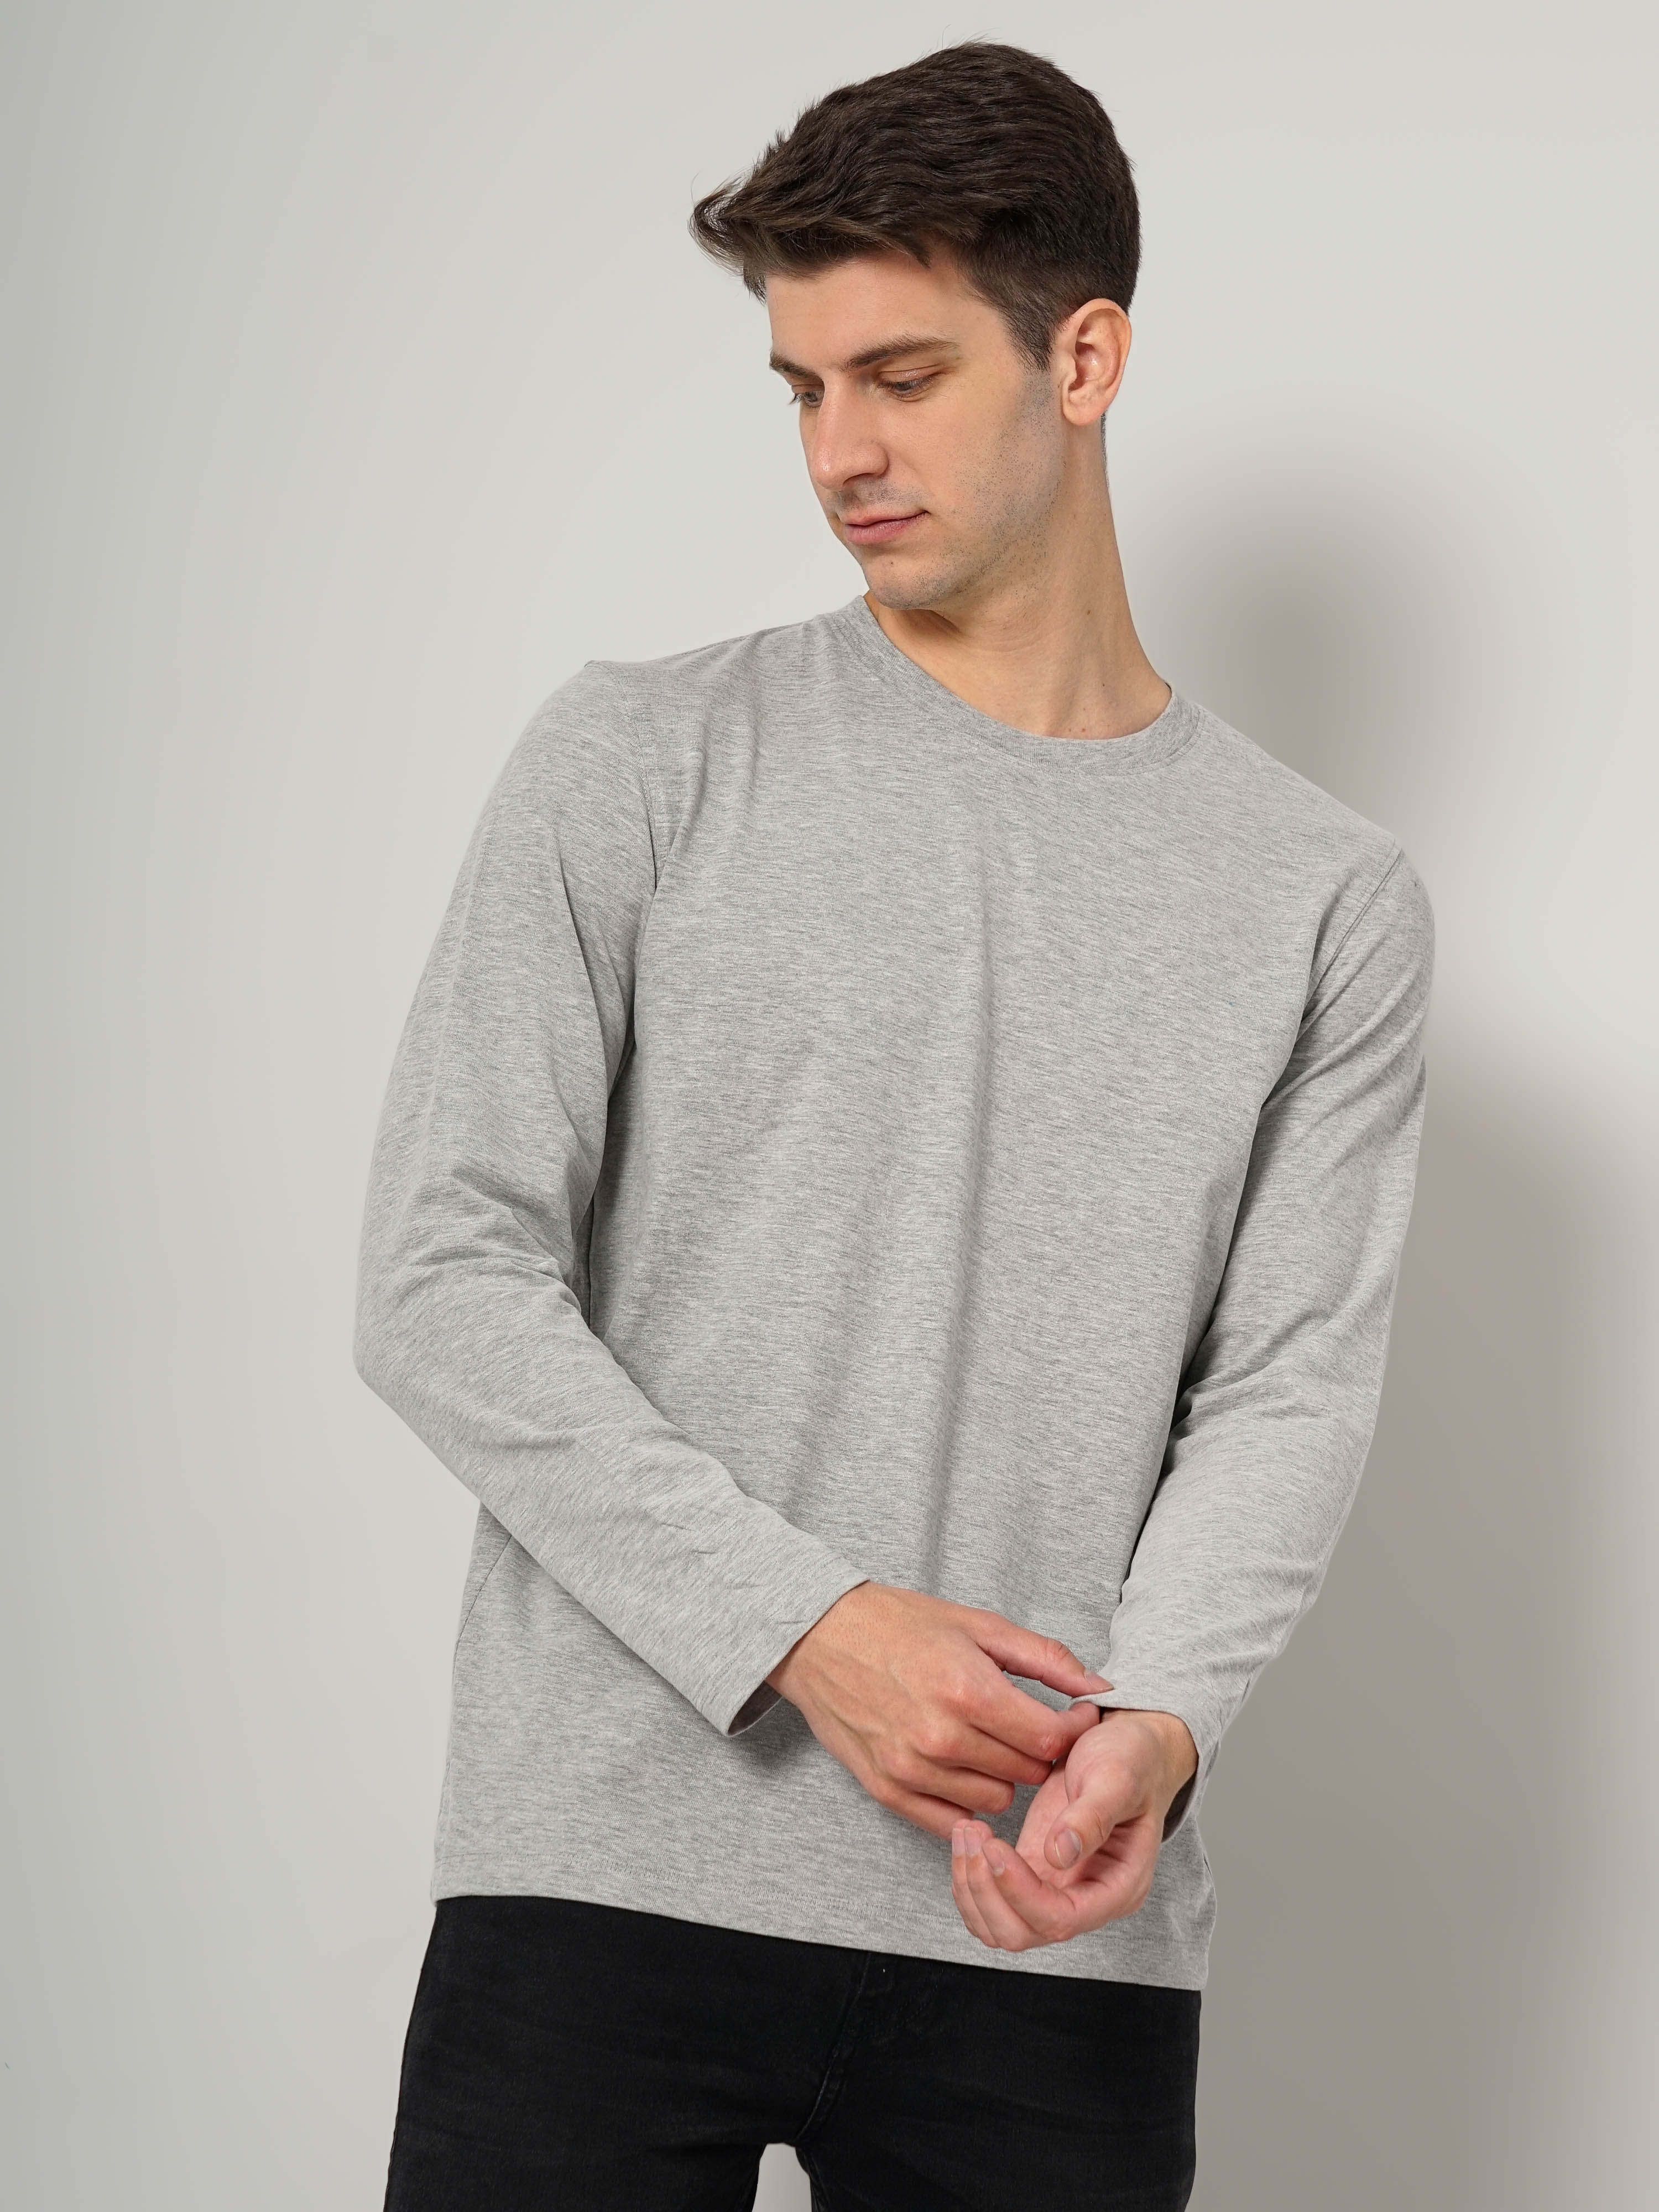 Men's Grey Solid Sweatshirts